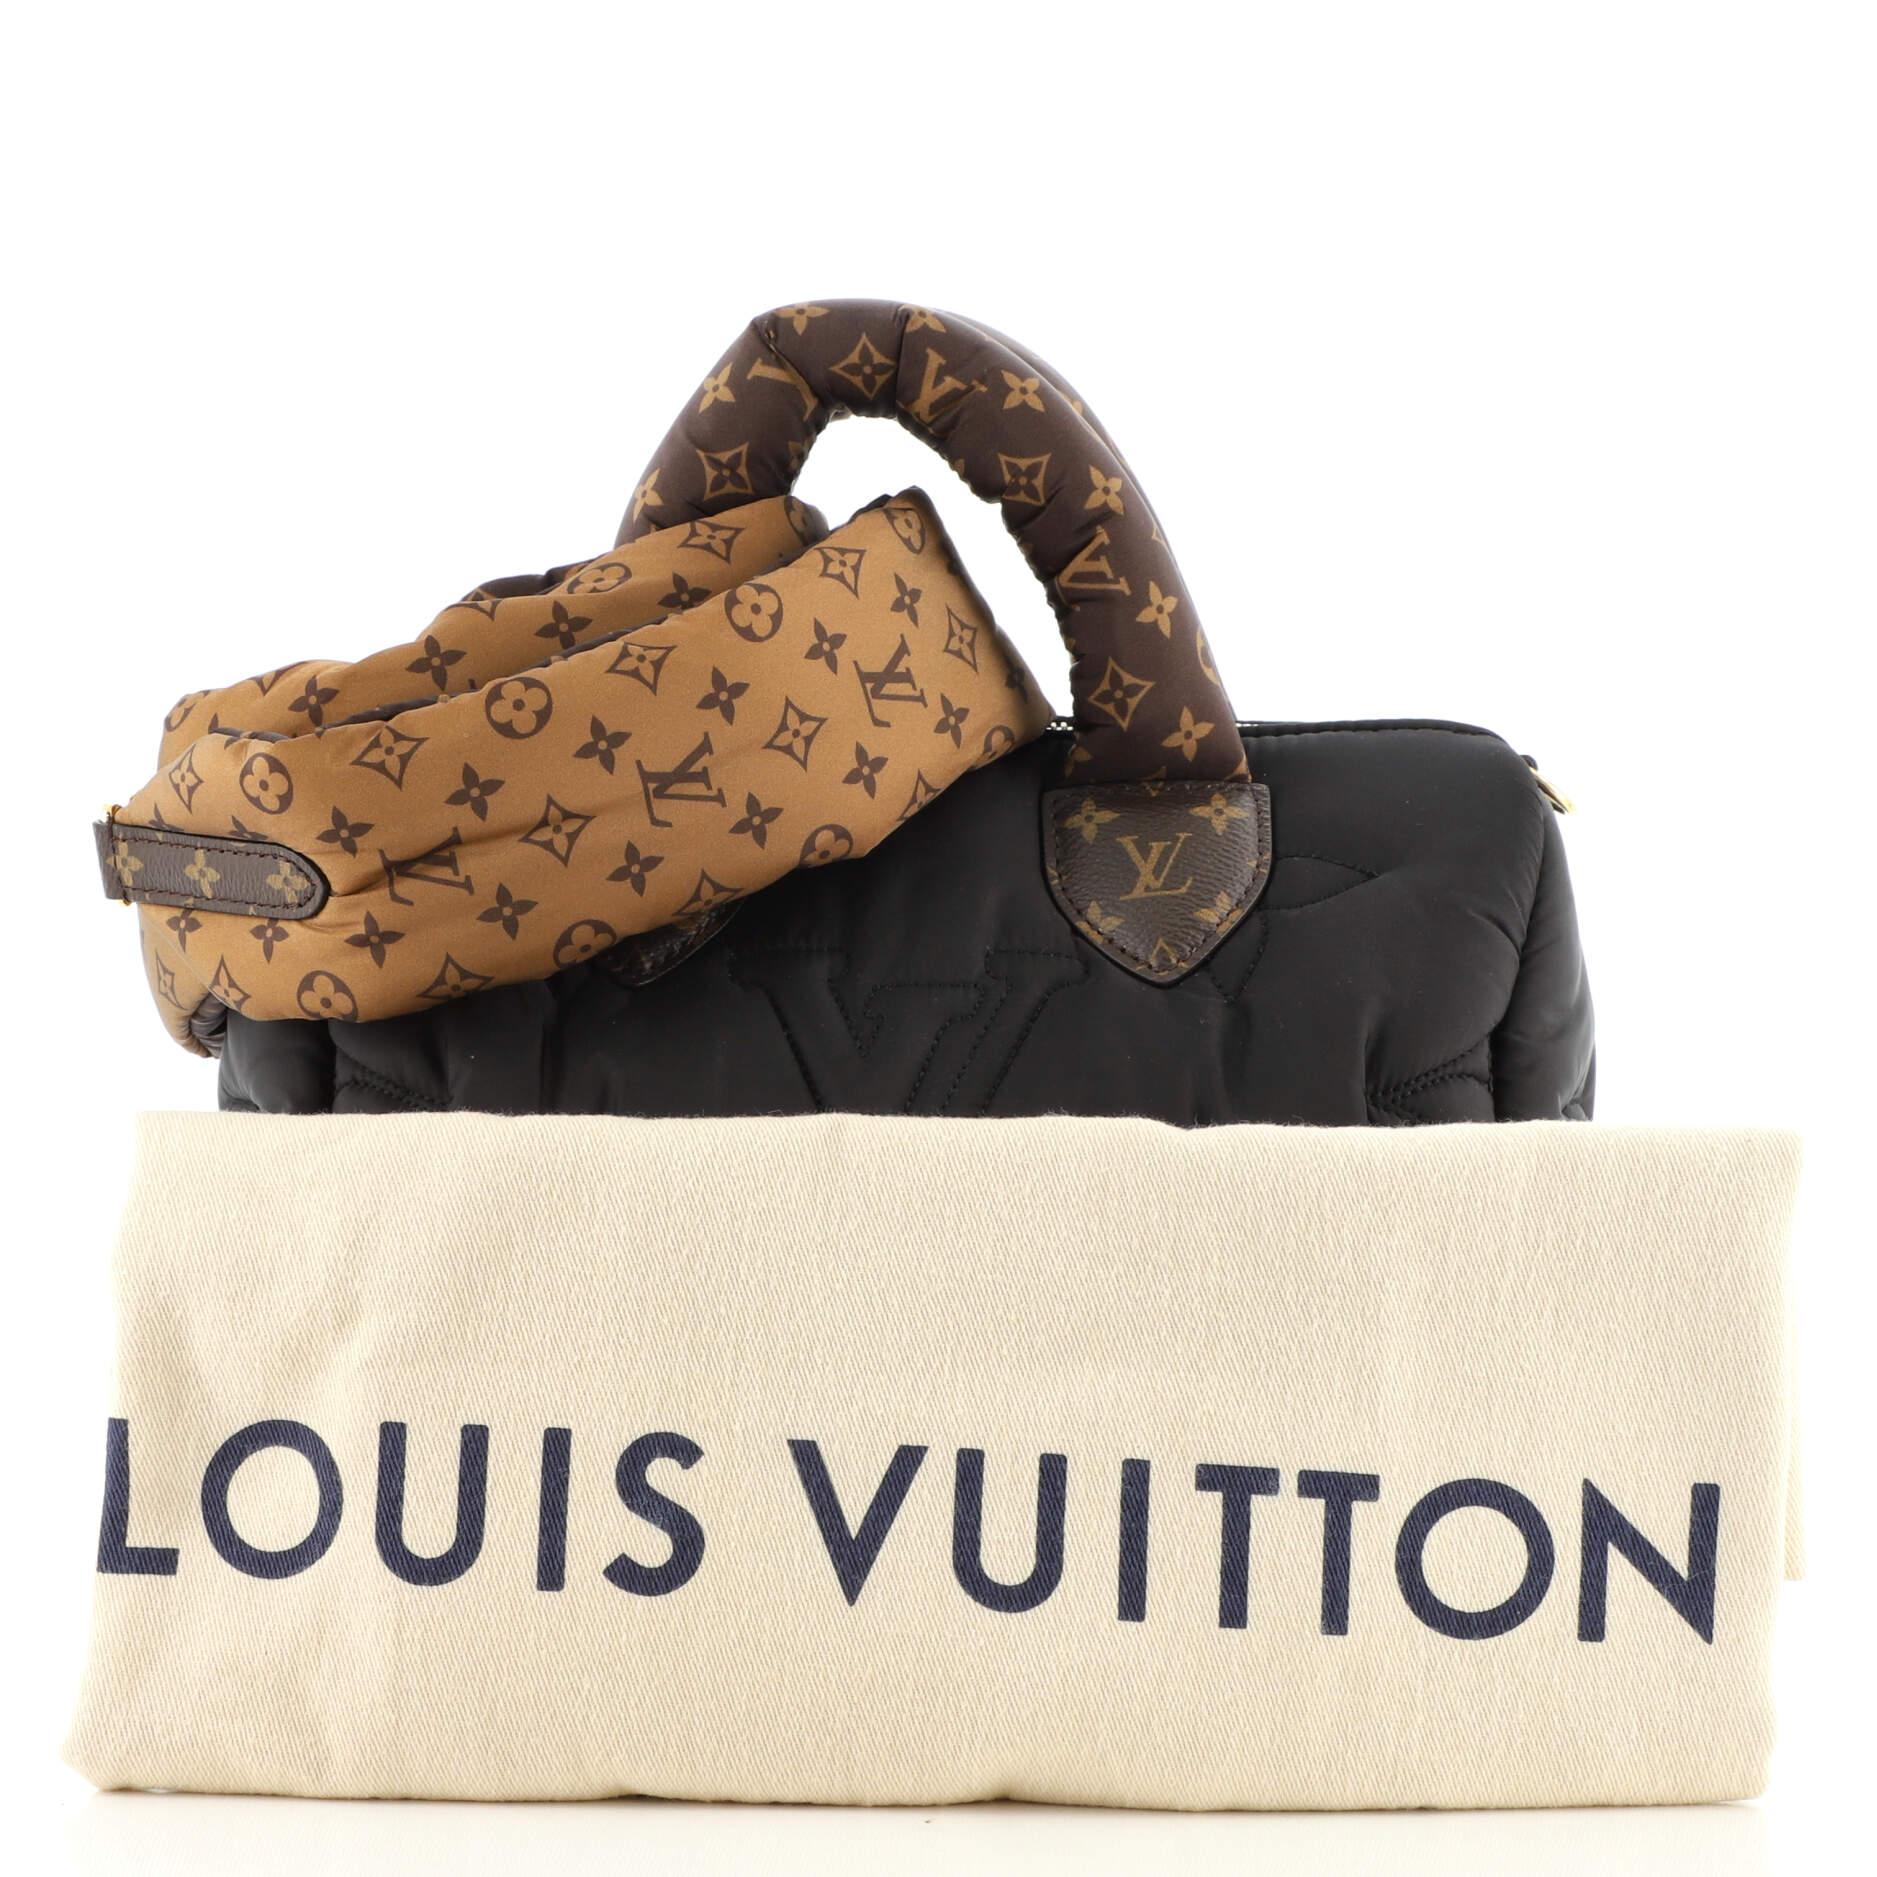 Louis Vuitton Pillow - 21 For Sale on 1stDibs  louis vuitton pillow bag,  louis vuitton cushion, puffy louis vuitton